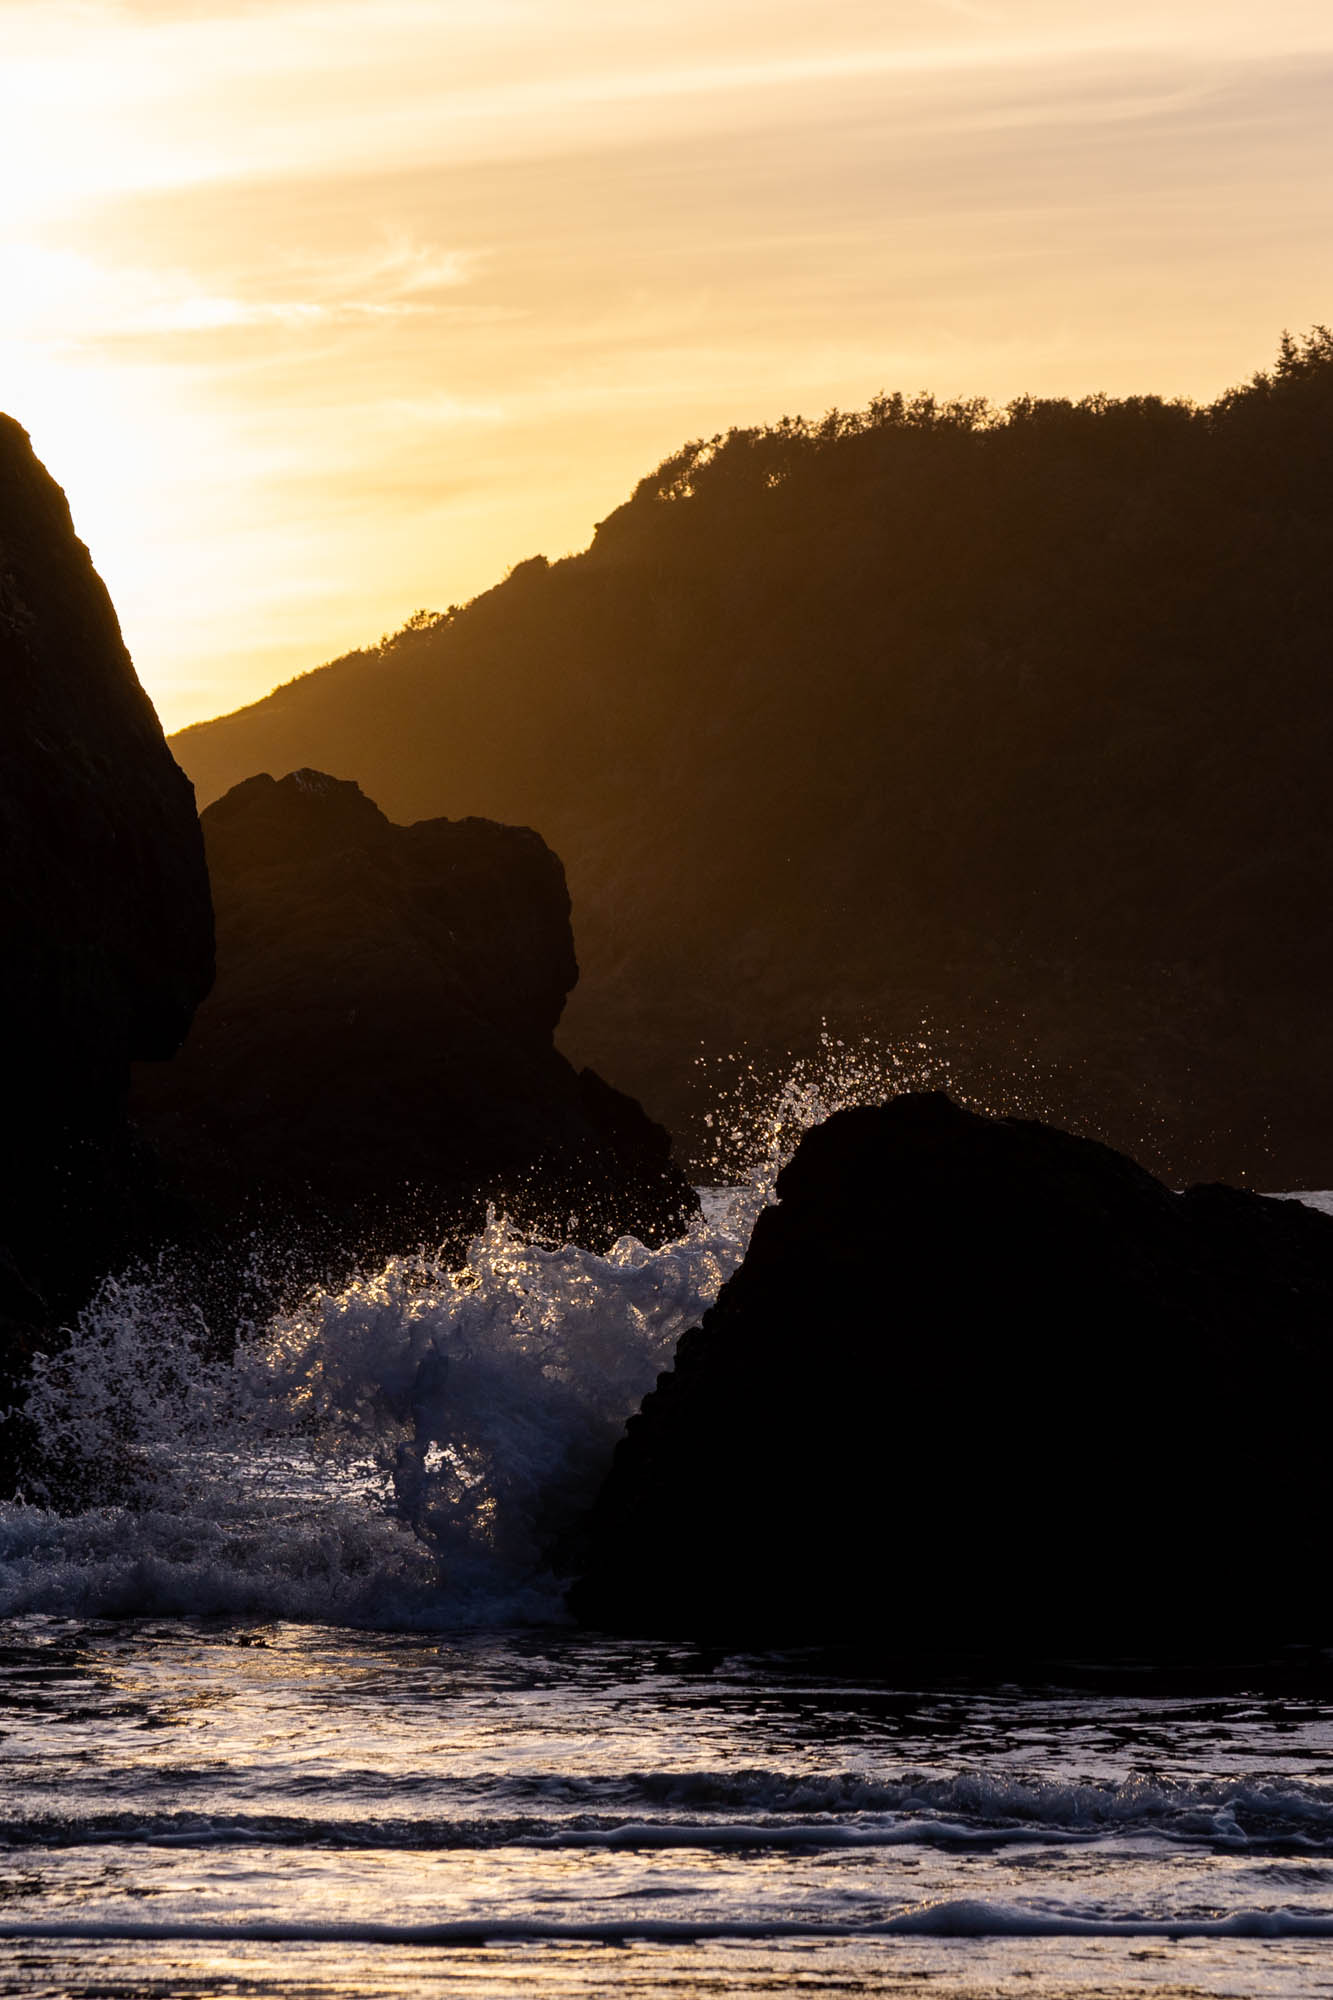 The ocean splashes over some rocks at sunset